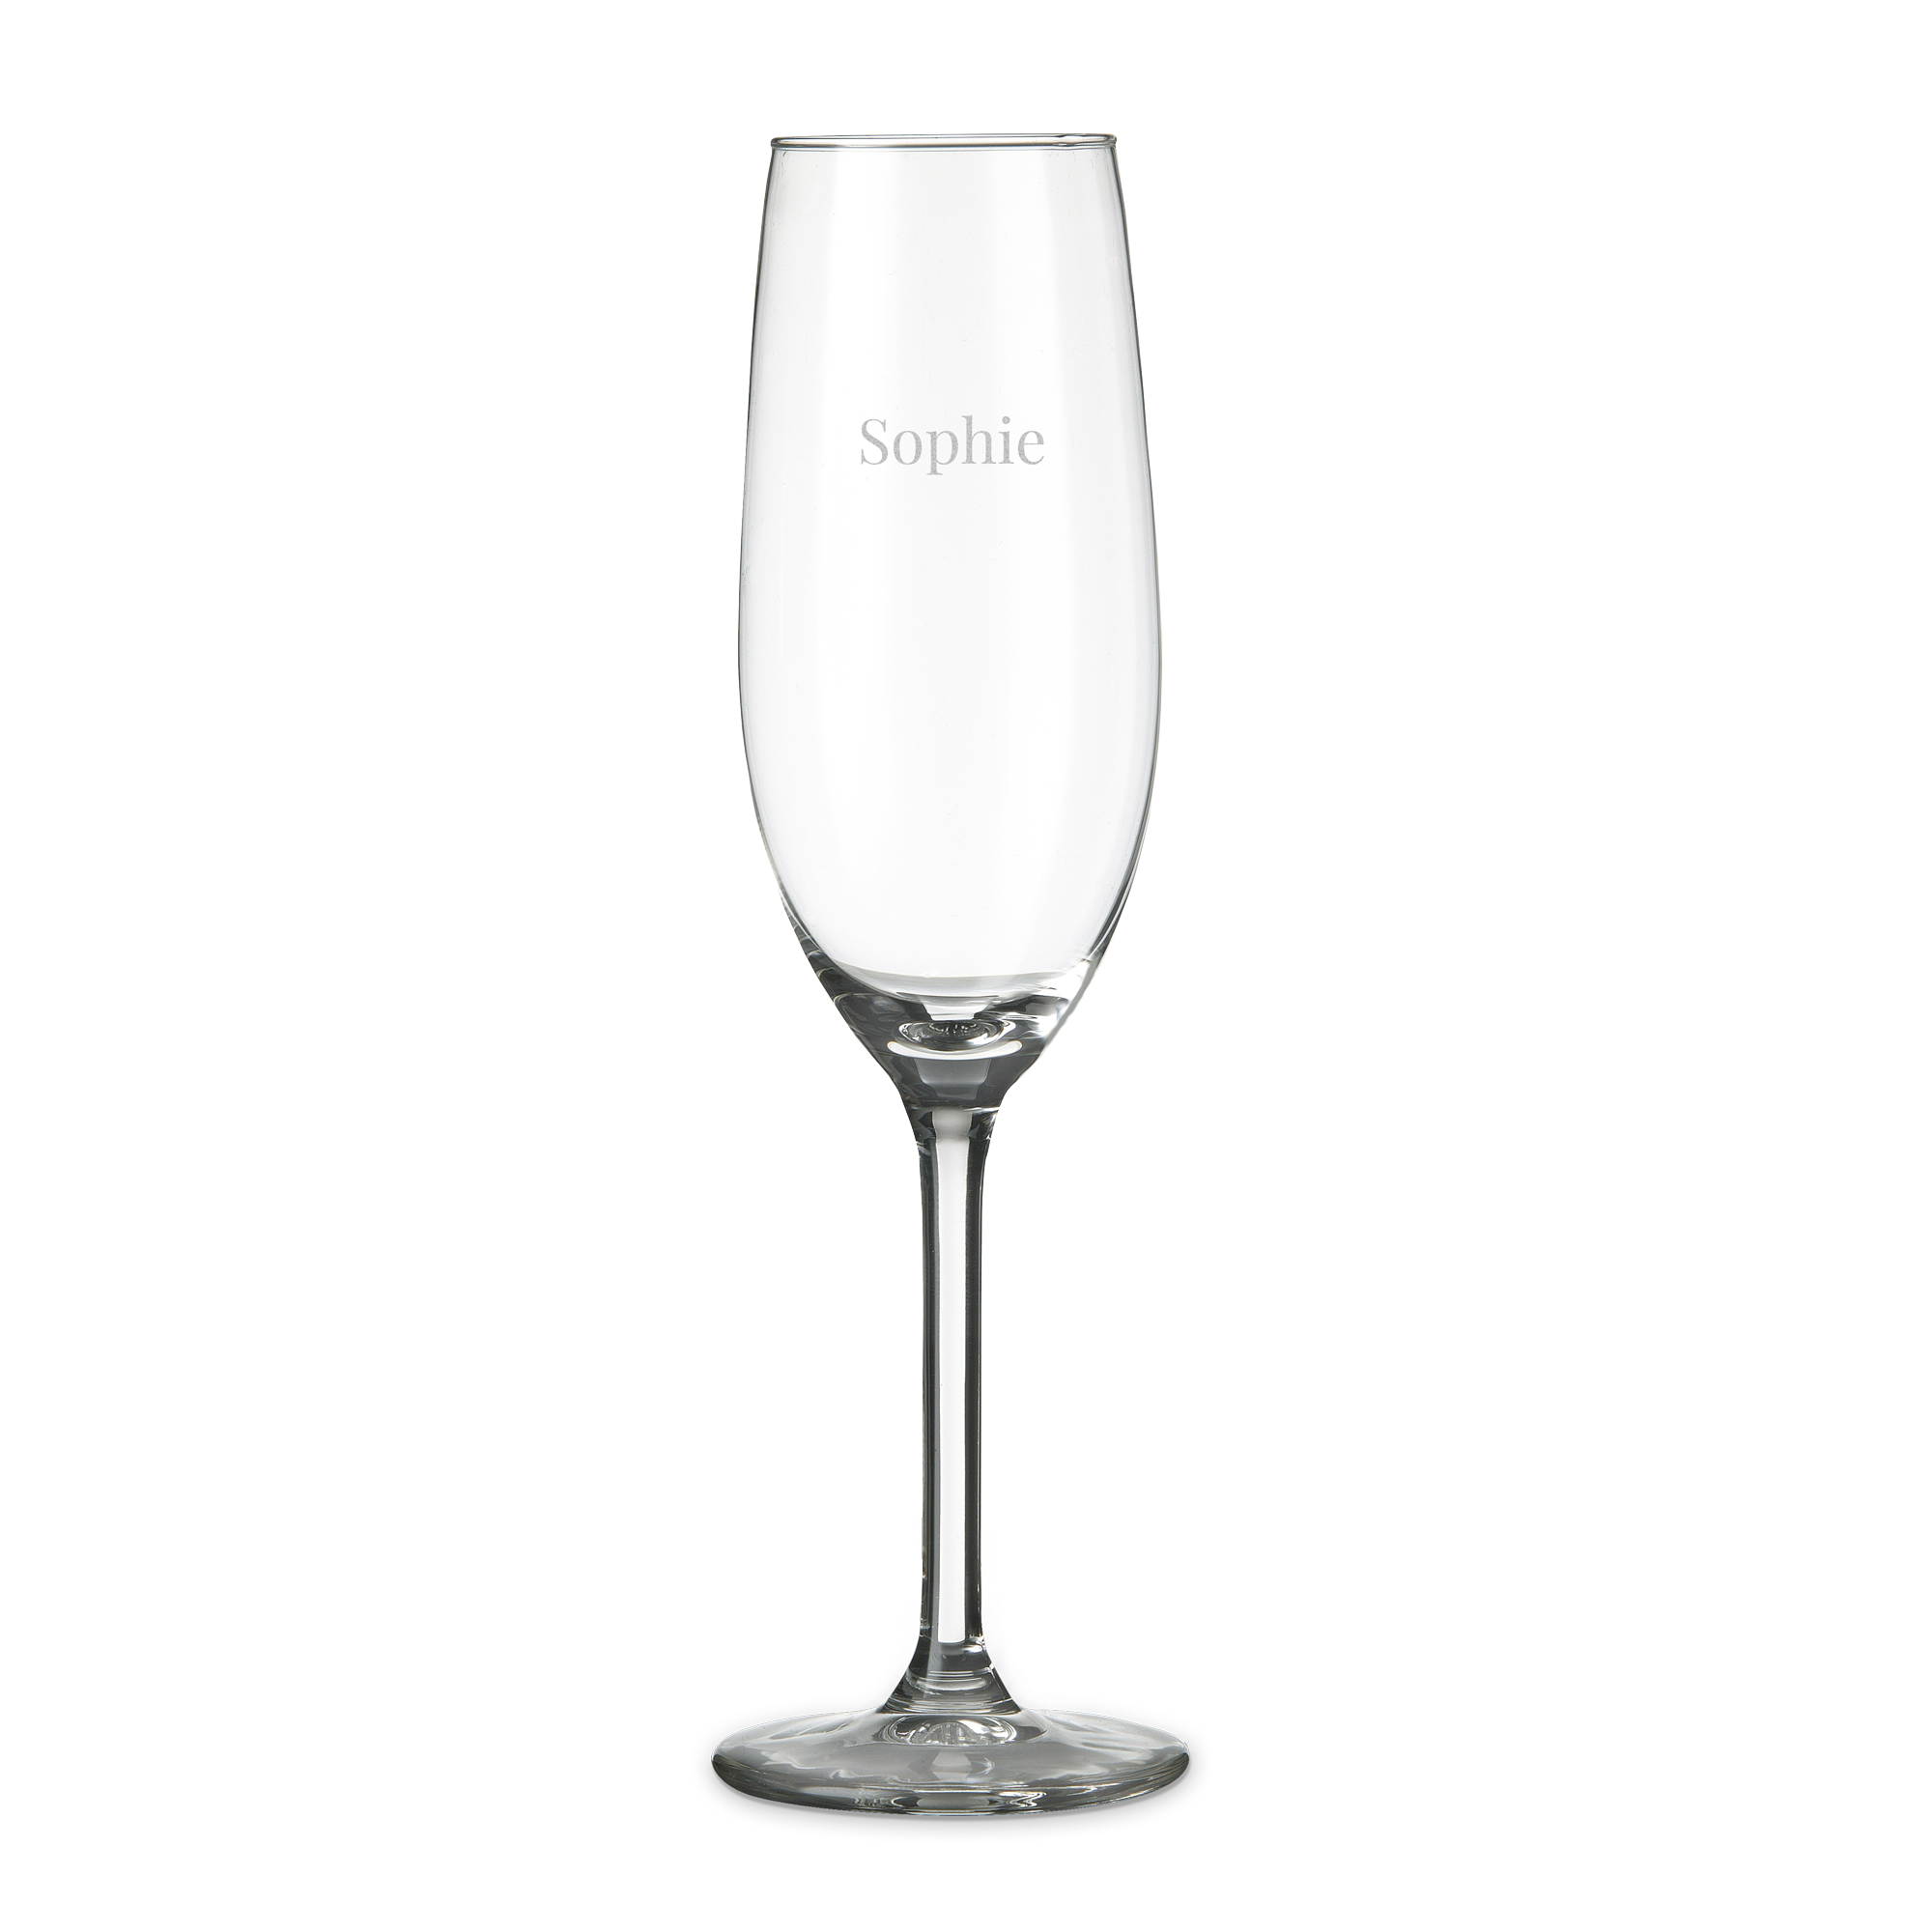 Personalised Champagne Glasses - 6 pcs